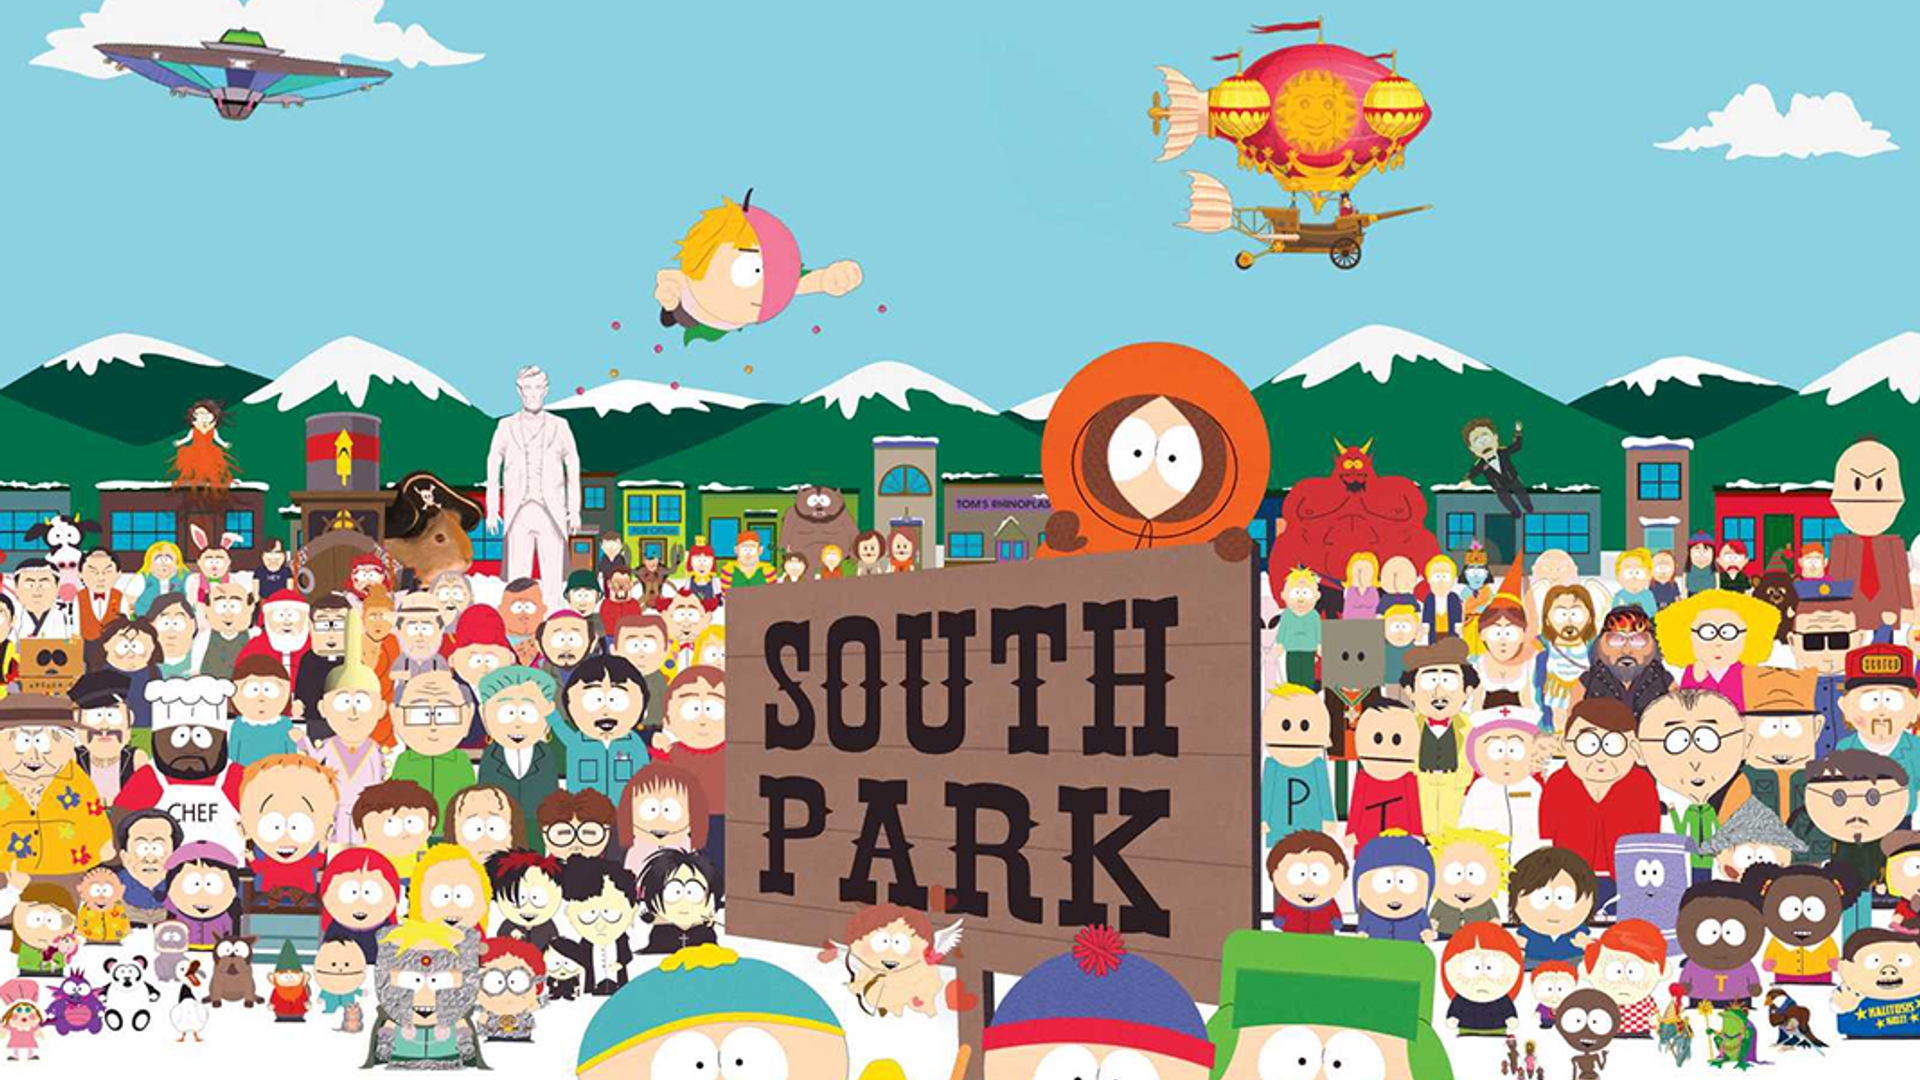 TV-South Park